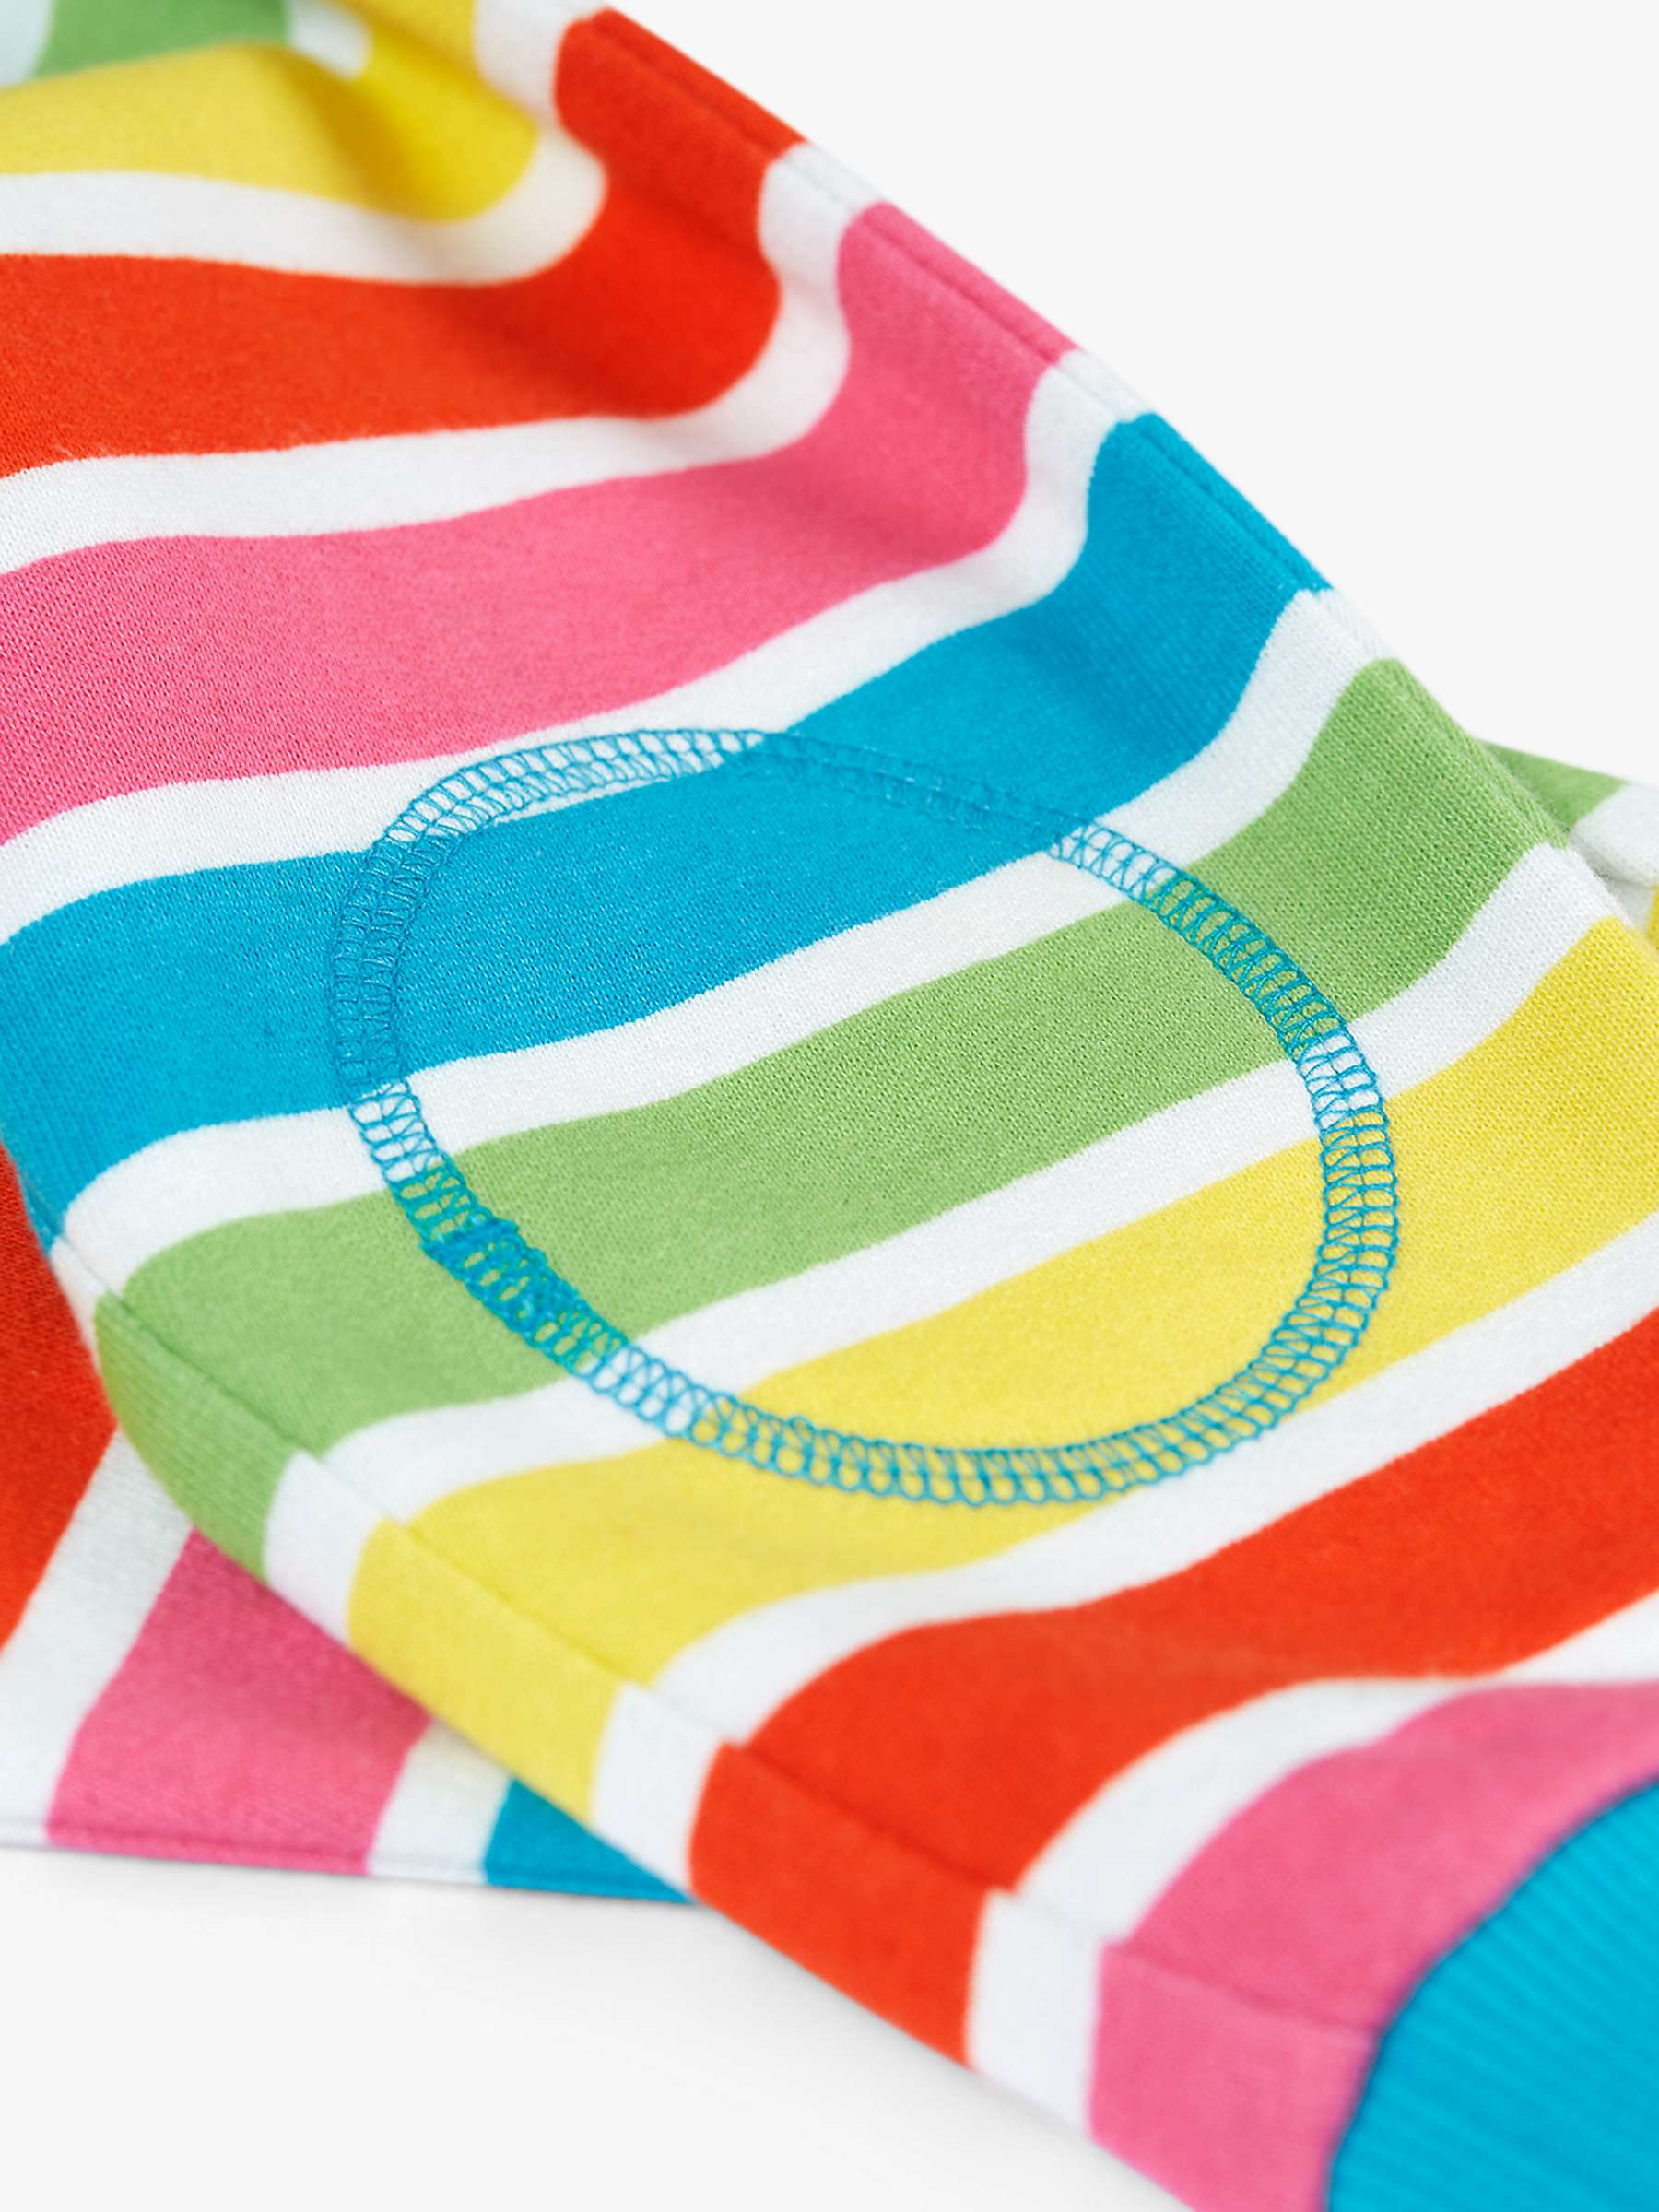 Buy Frugi Baby Snuggle Crawlers Rainbow Stripe Organic Cotton Joggers, Multi Online at johnlewis.com